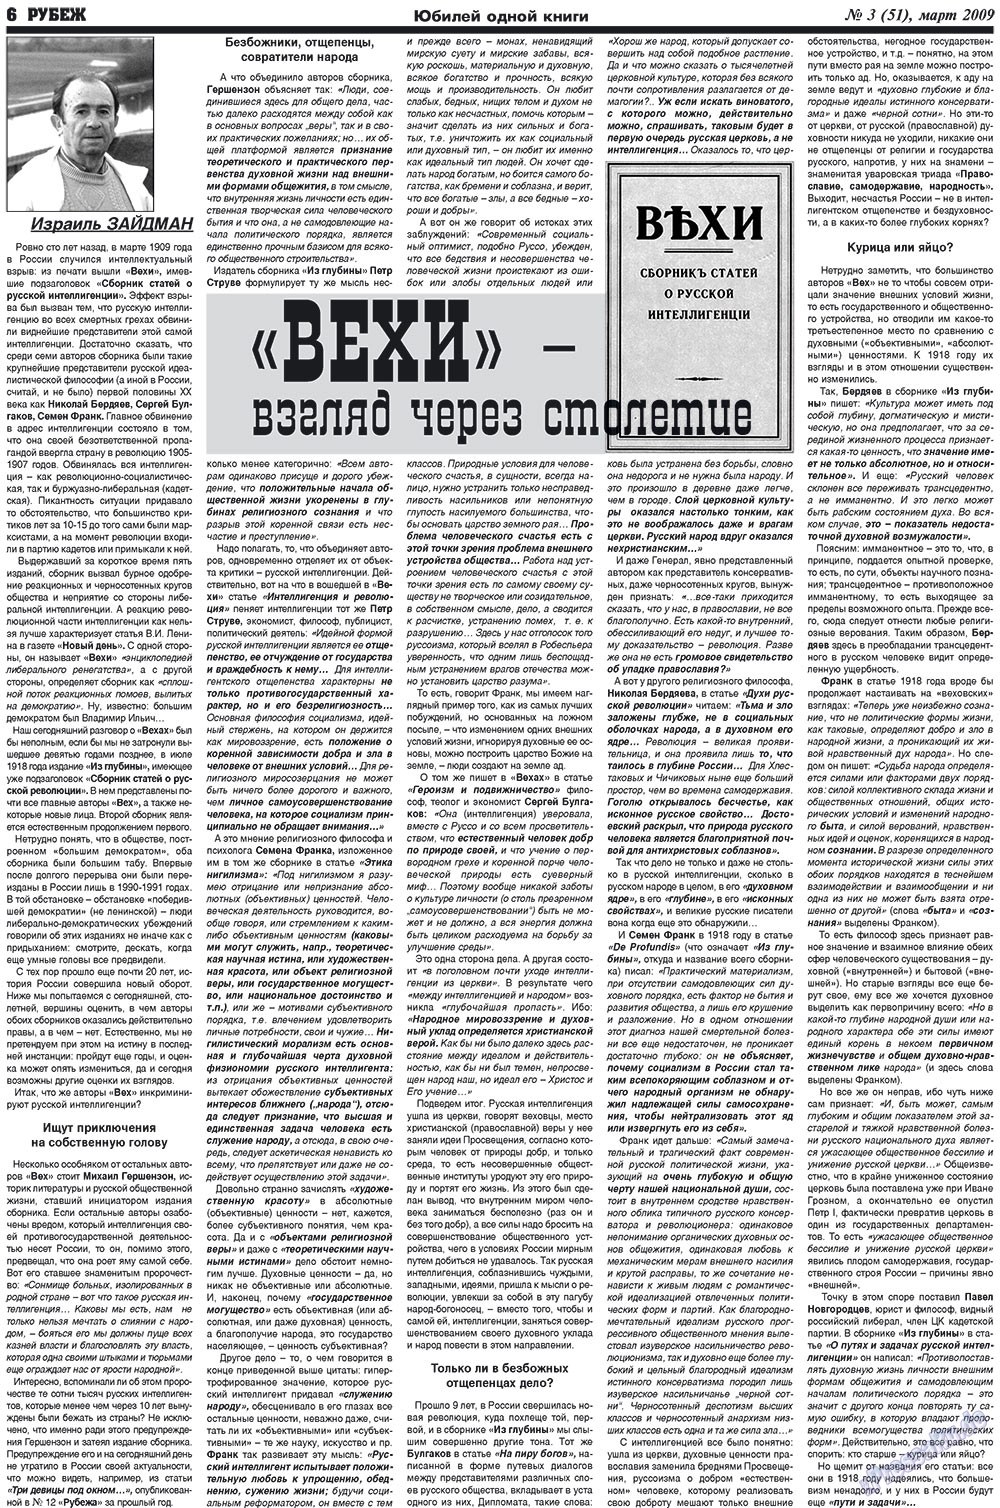 Рубеж, газета. 2009 №3 стр.6